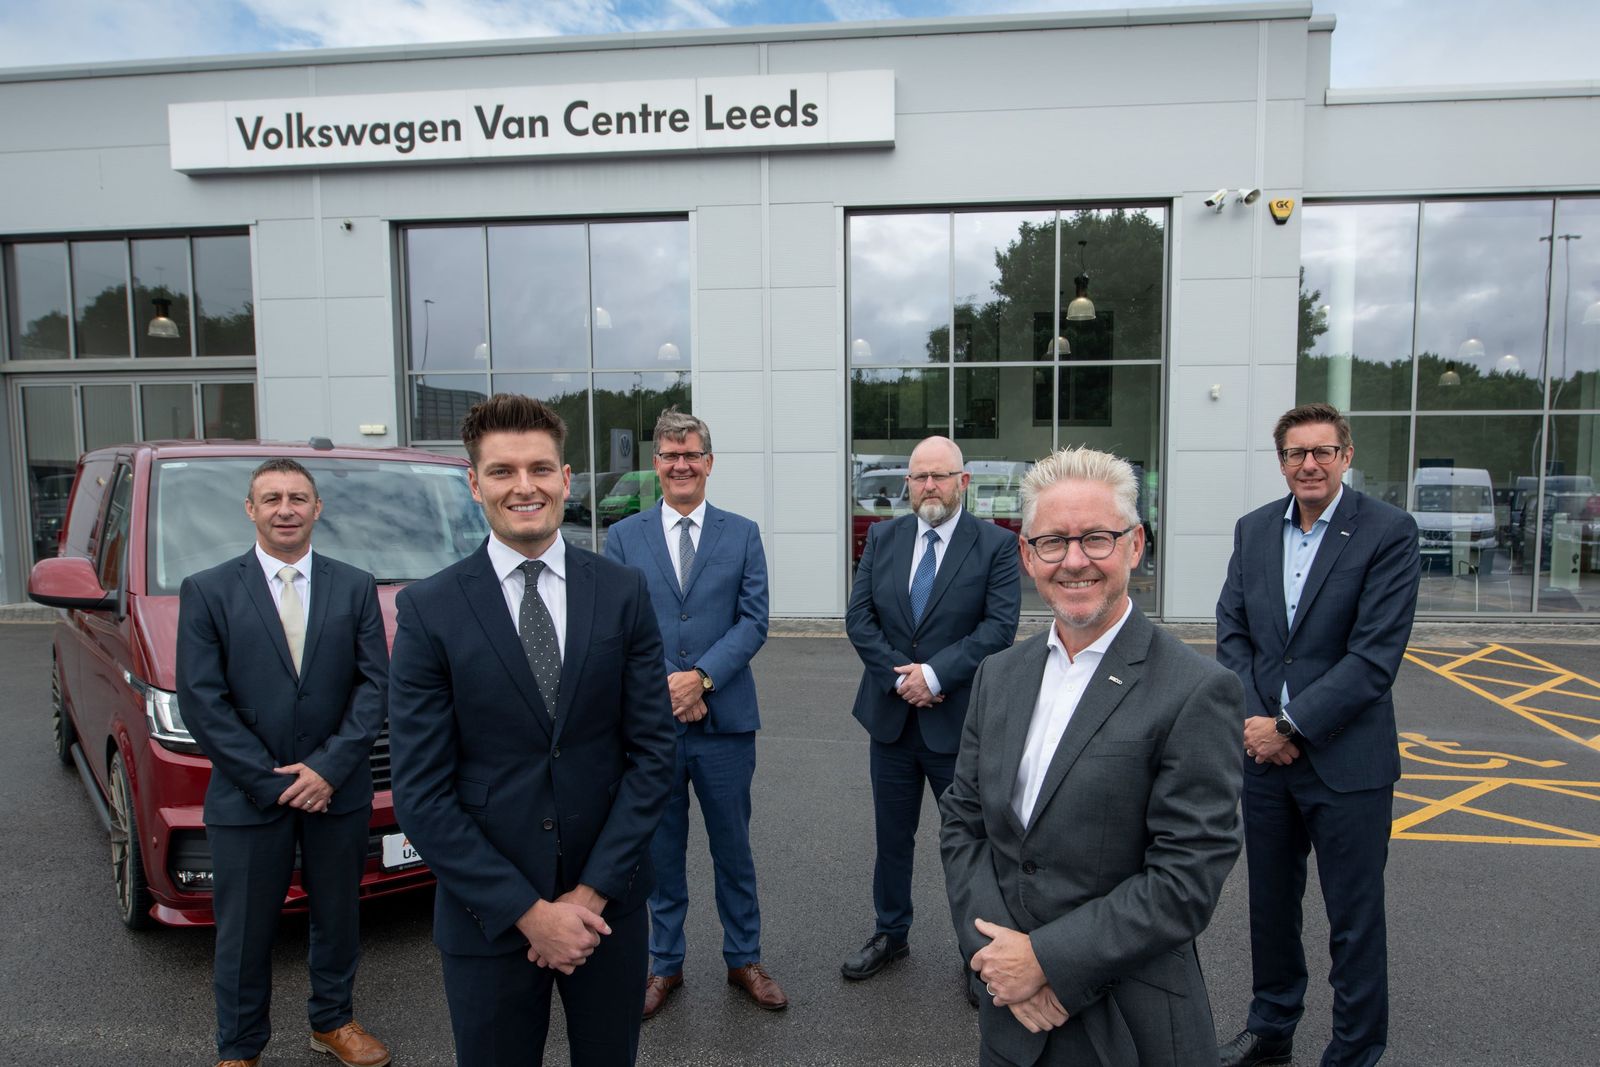 JCT600 expands retail van operation with acquisition of Volkswagen Van Centre